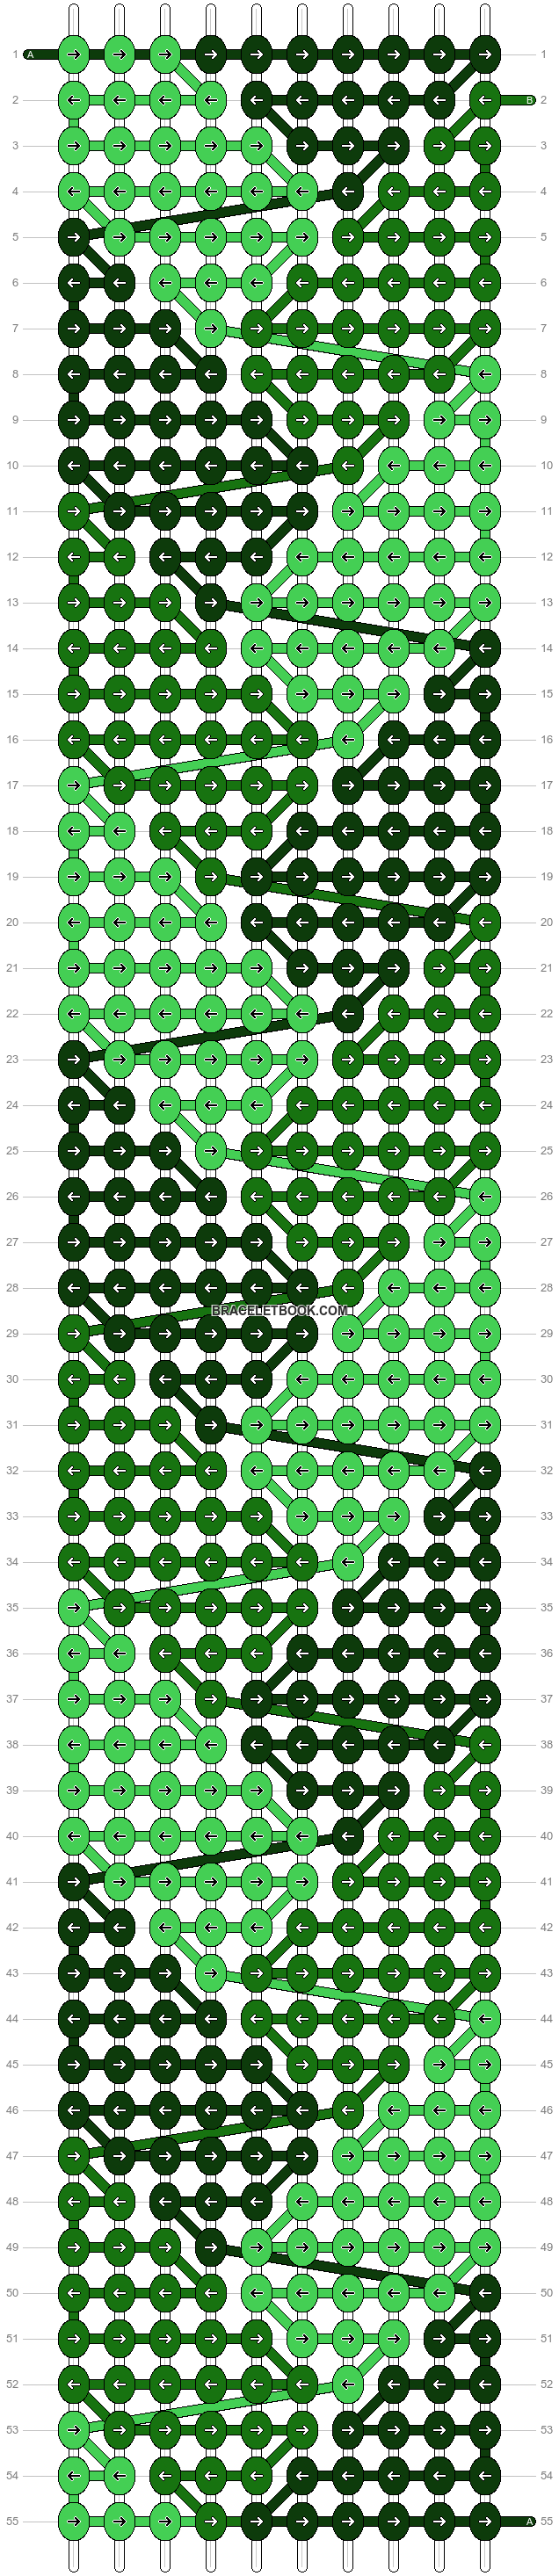 Alpha pattern #25291 variation #173438 pattern